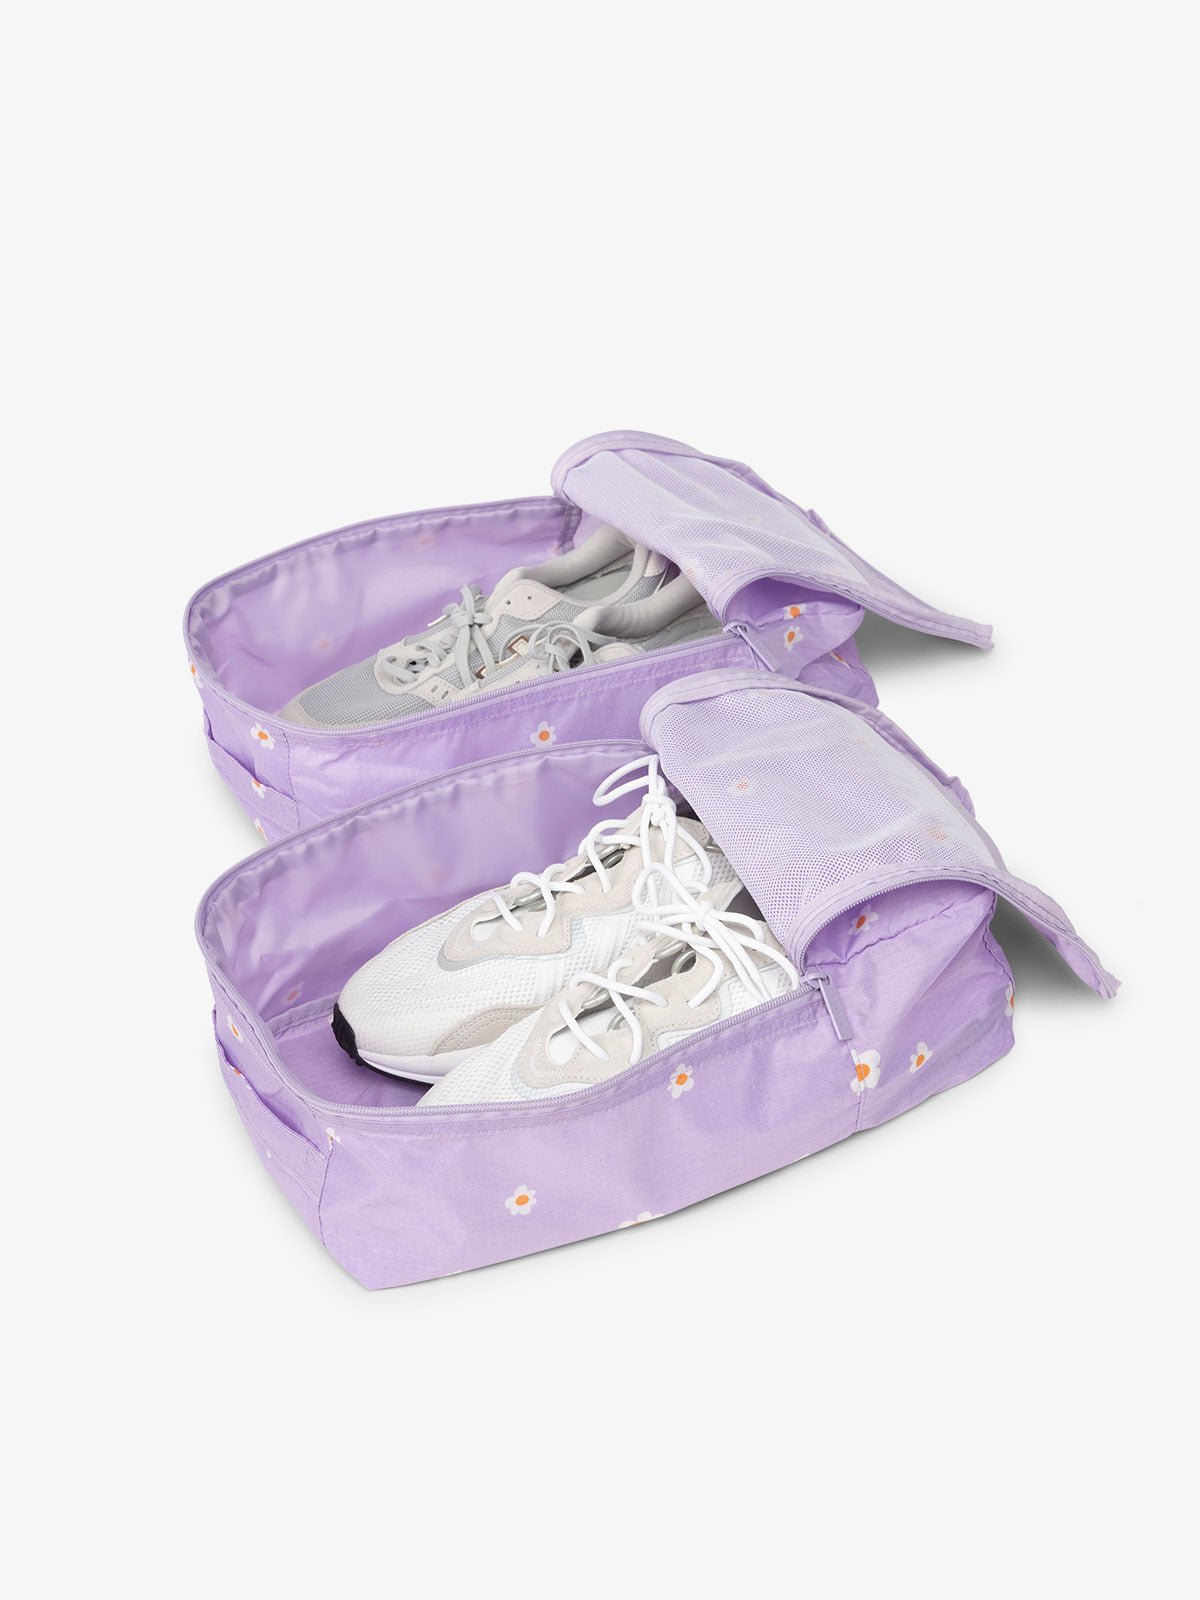 CALPAK Compakt shoe bag set with mesh pockets for travel in purple floral print